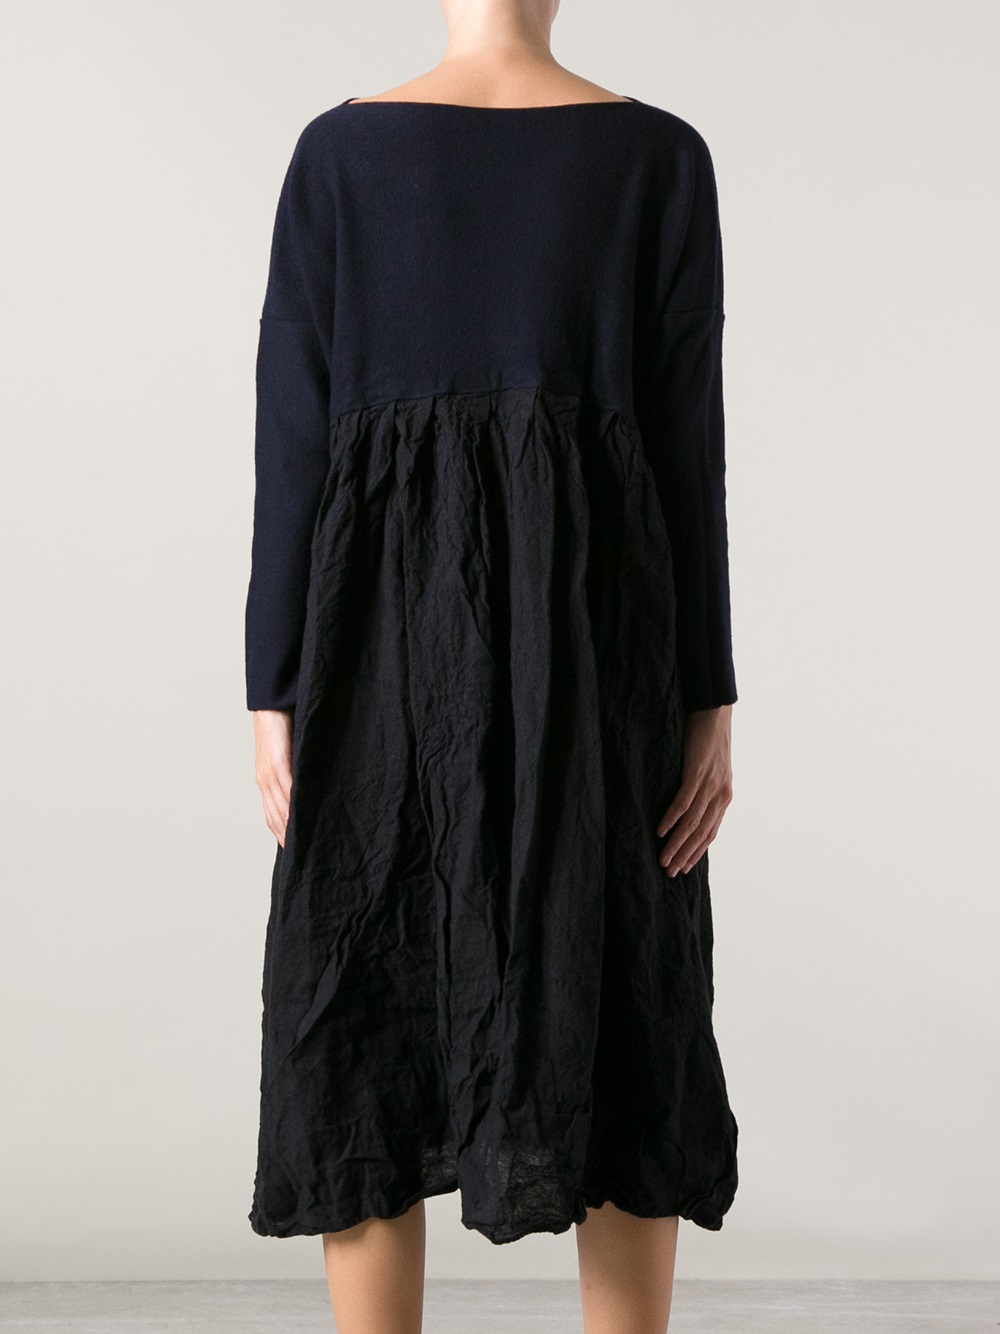 Lyst - Daniela Gregis Crumple Effect Oversize Dress in Black